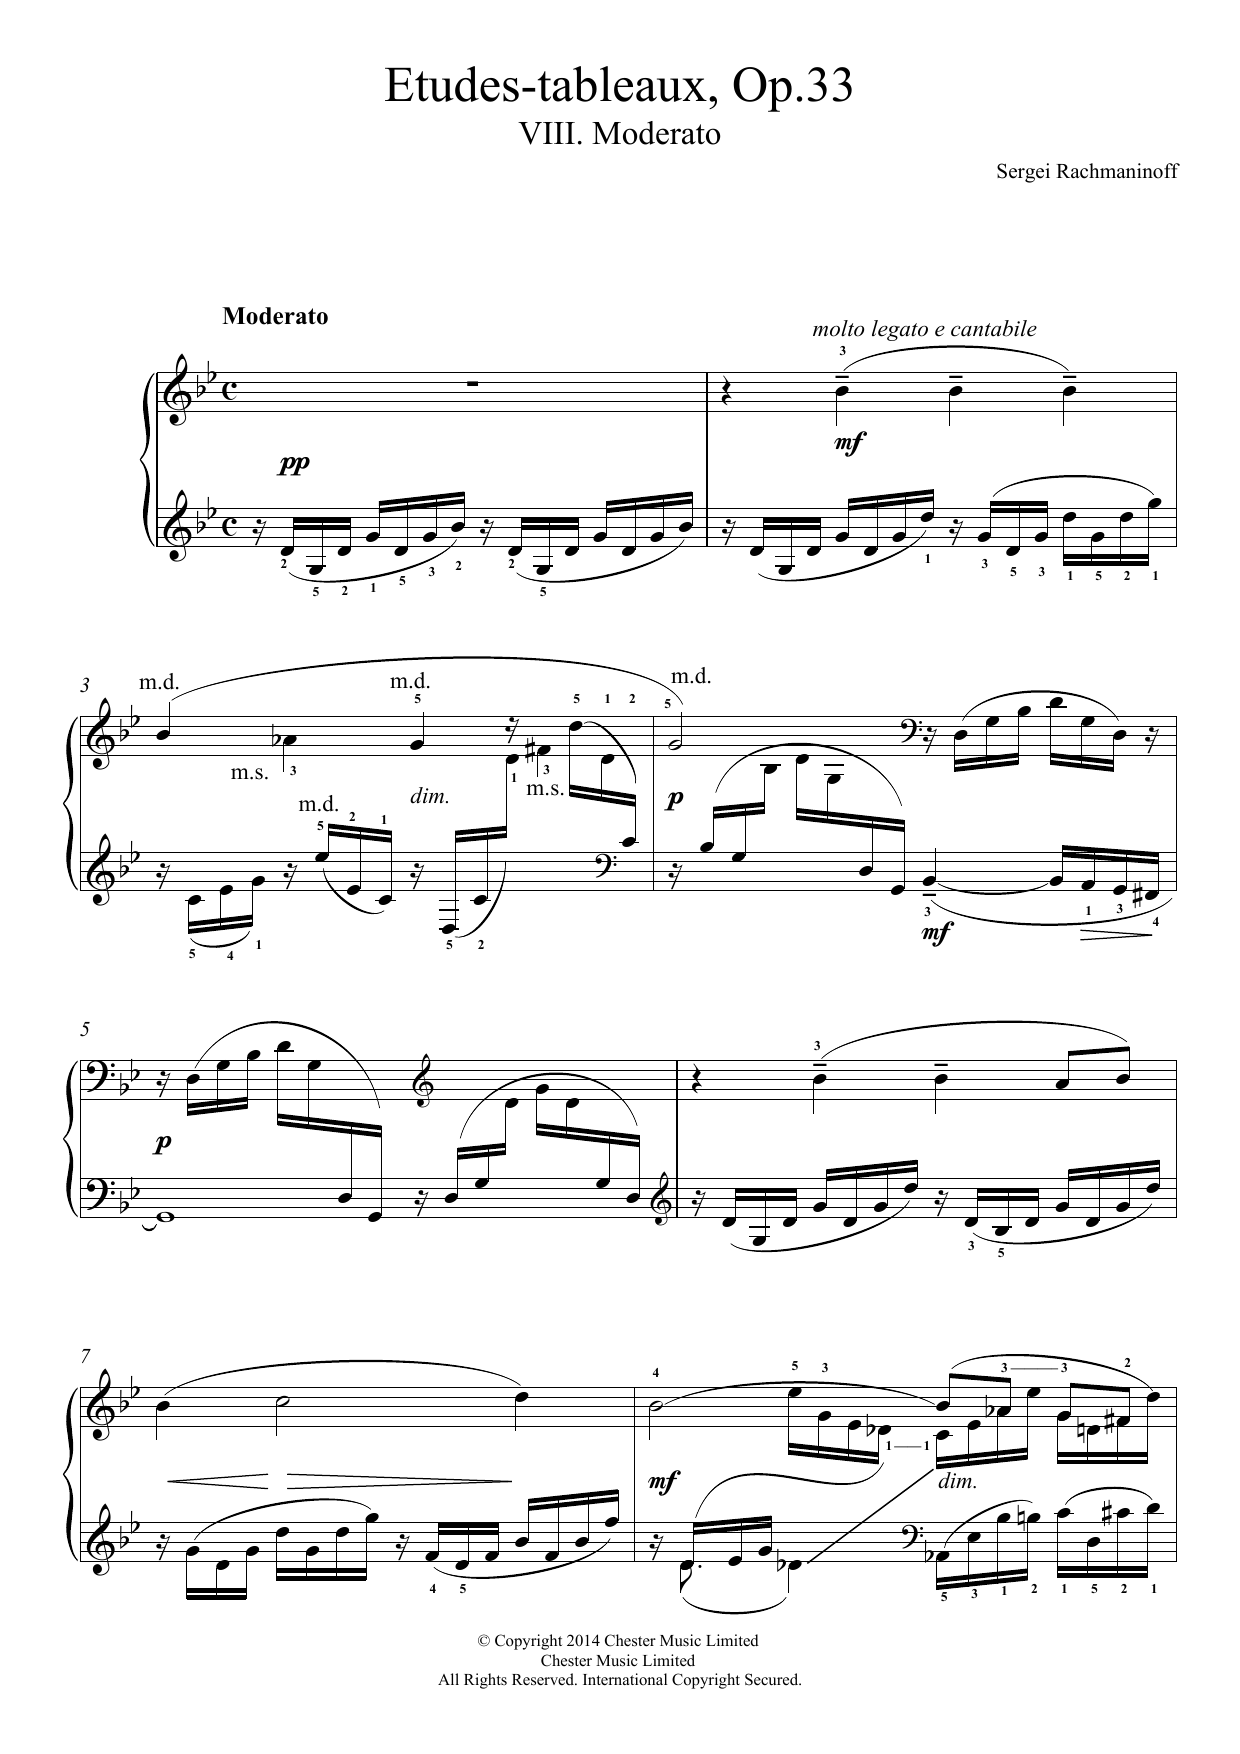 Download Sergei Rachmaninoff Etudes-tableaux Op.33, No.8 Moderato Sheet Music